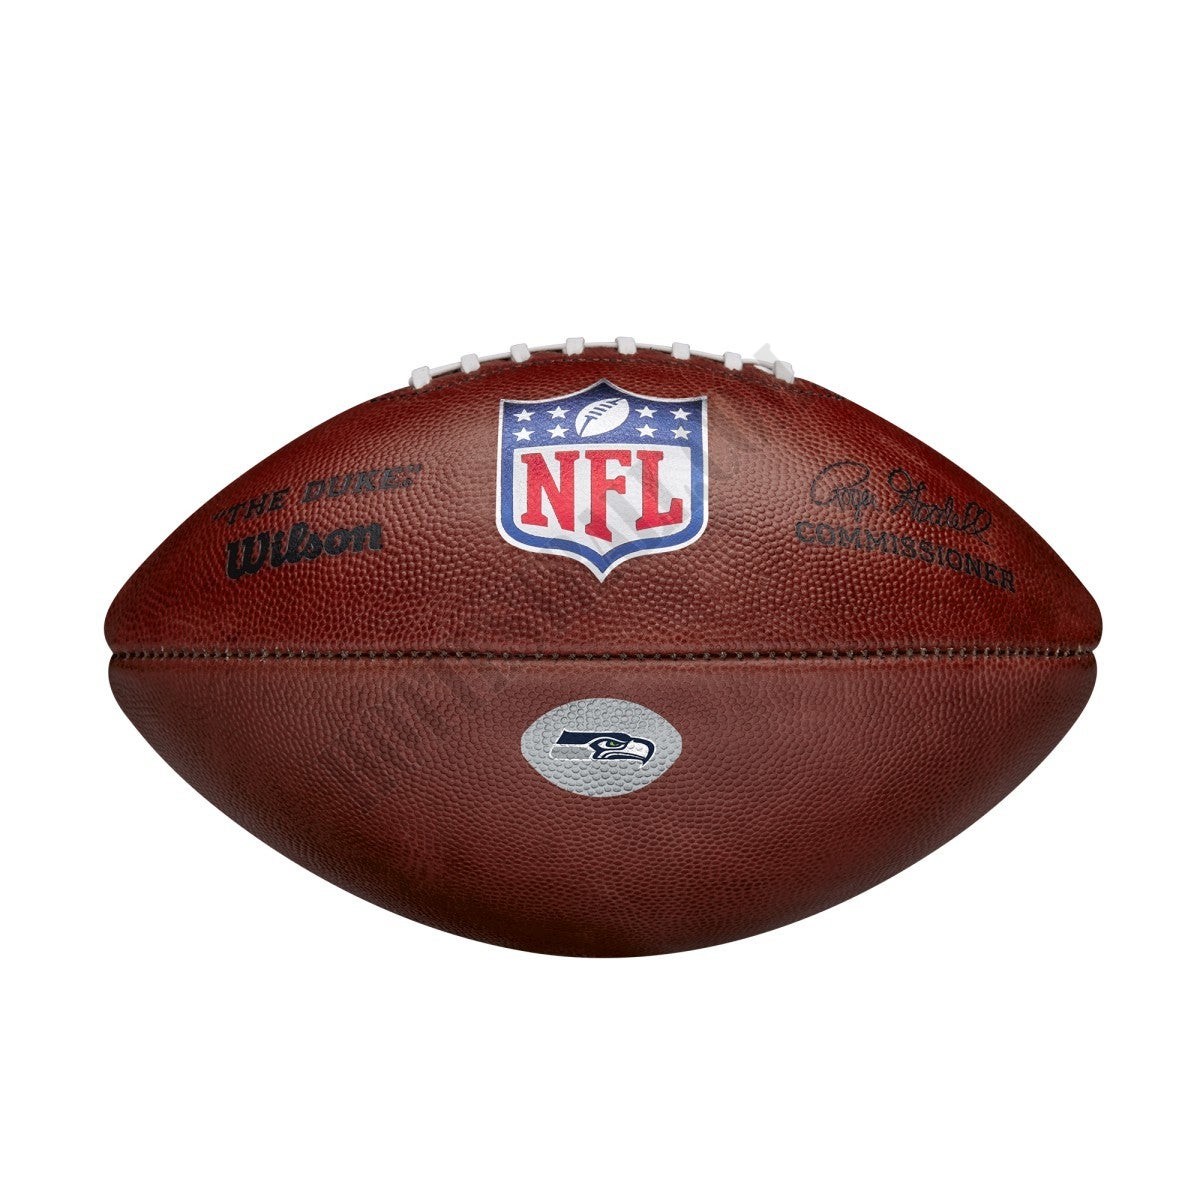 The Duke Decal NFL Football - Seattle Seahawks ● Wilson Promotions - The Duke Decal NFL Football - Seattle Seahawks ● Wilson Promotions